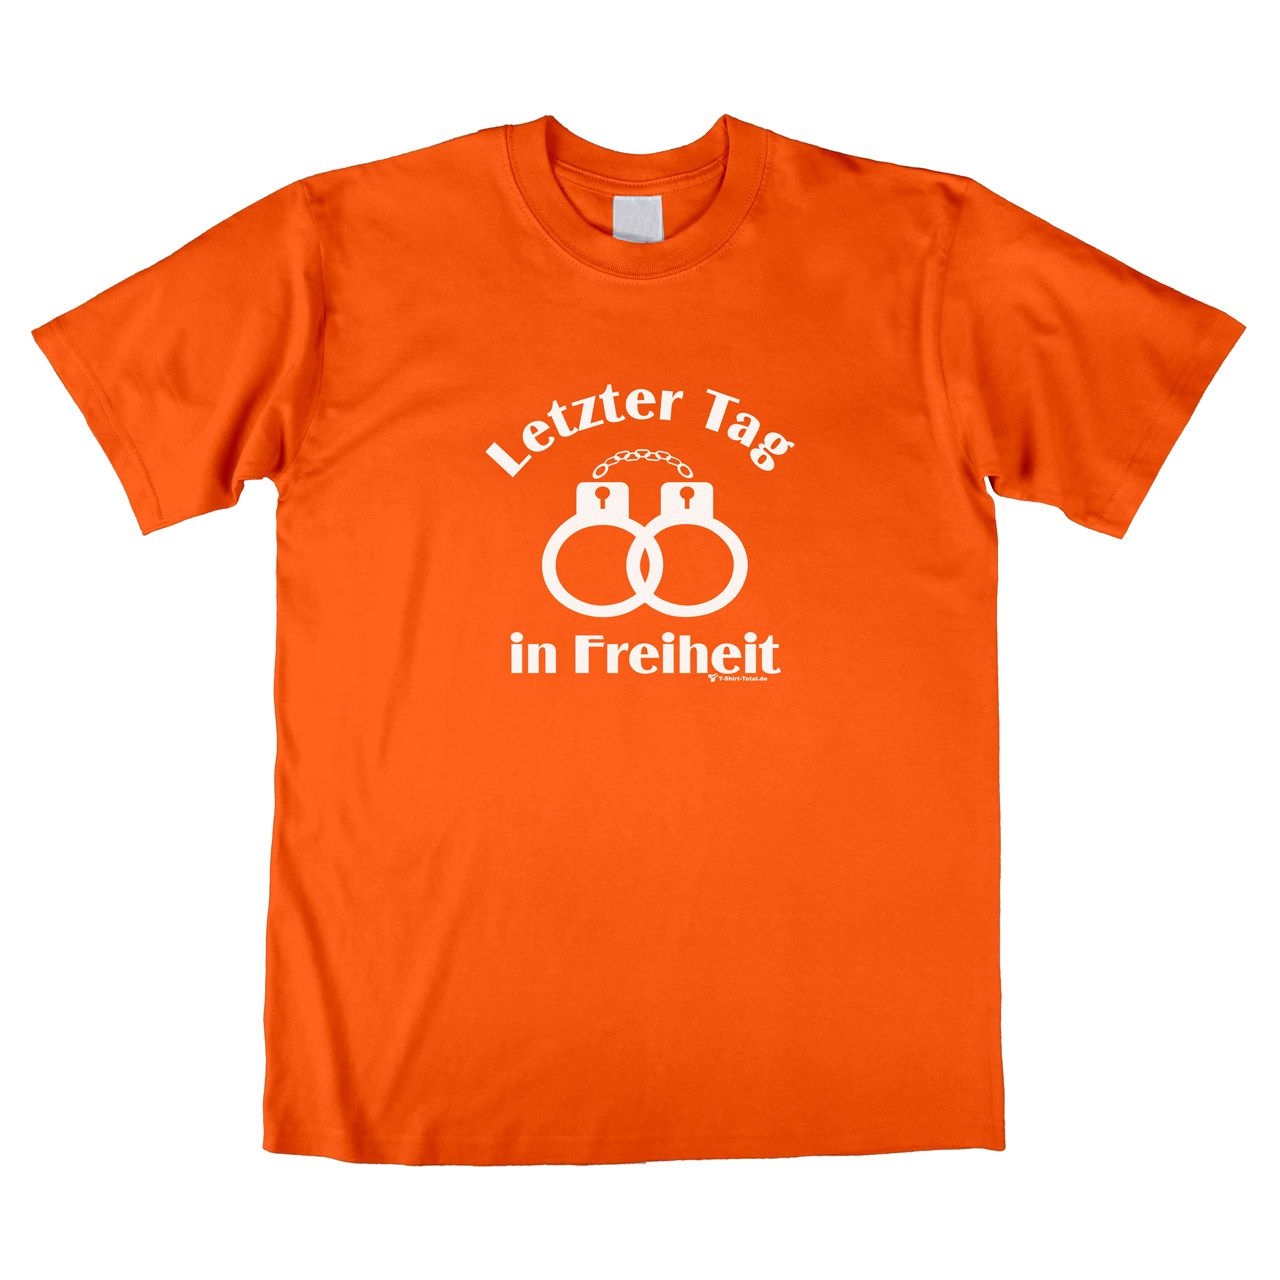 Letzter Tag in Freiheit Unisex T-Shirt orange Extra Large